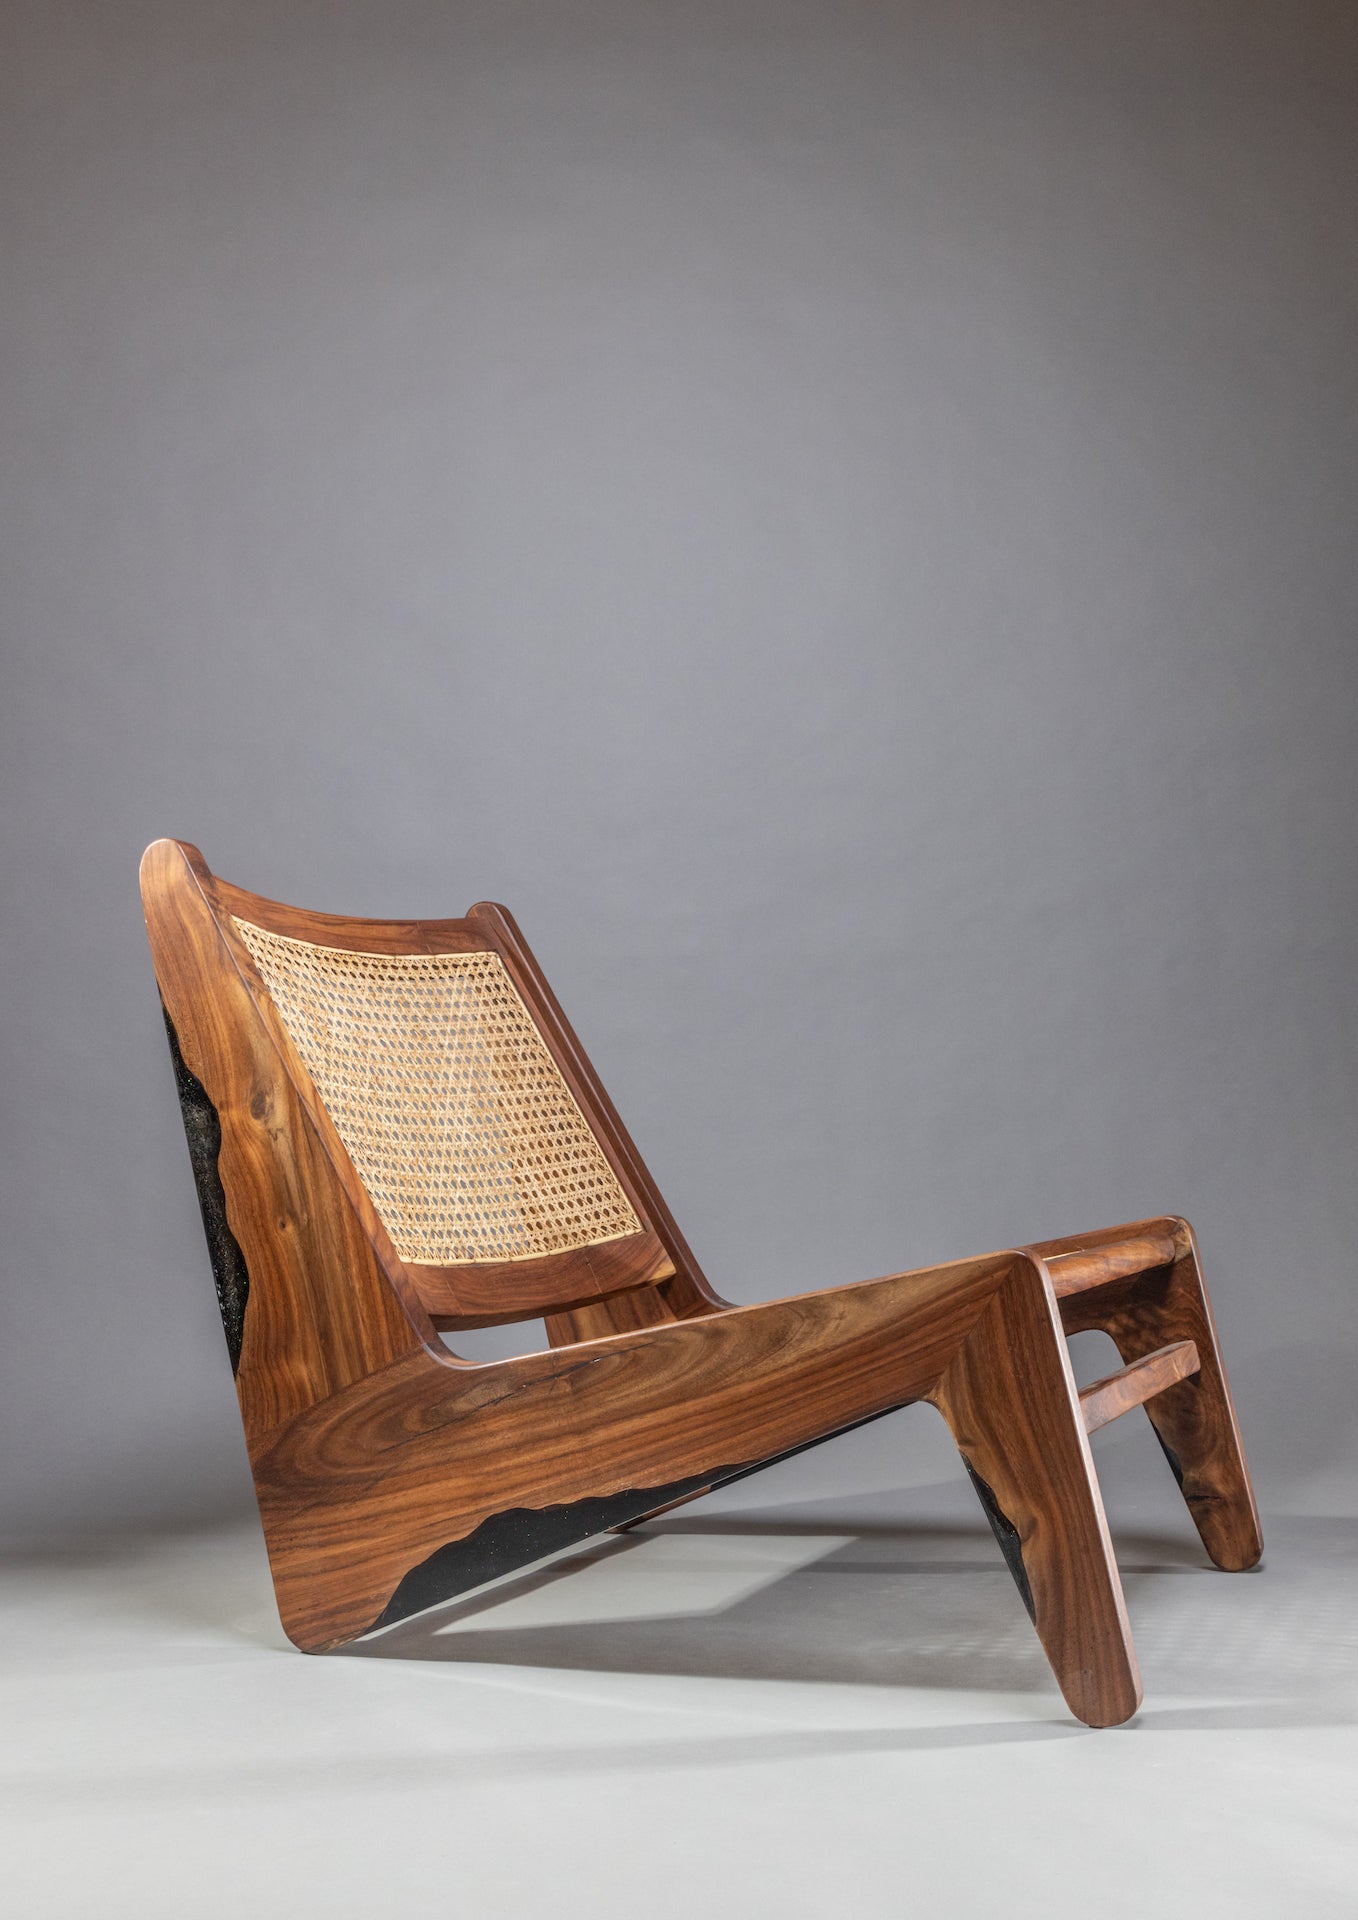 The 1955 Kangaroo Chair by SIDR